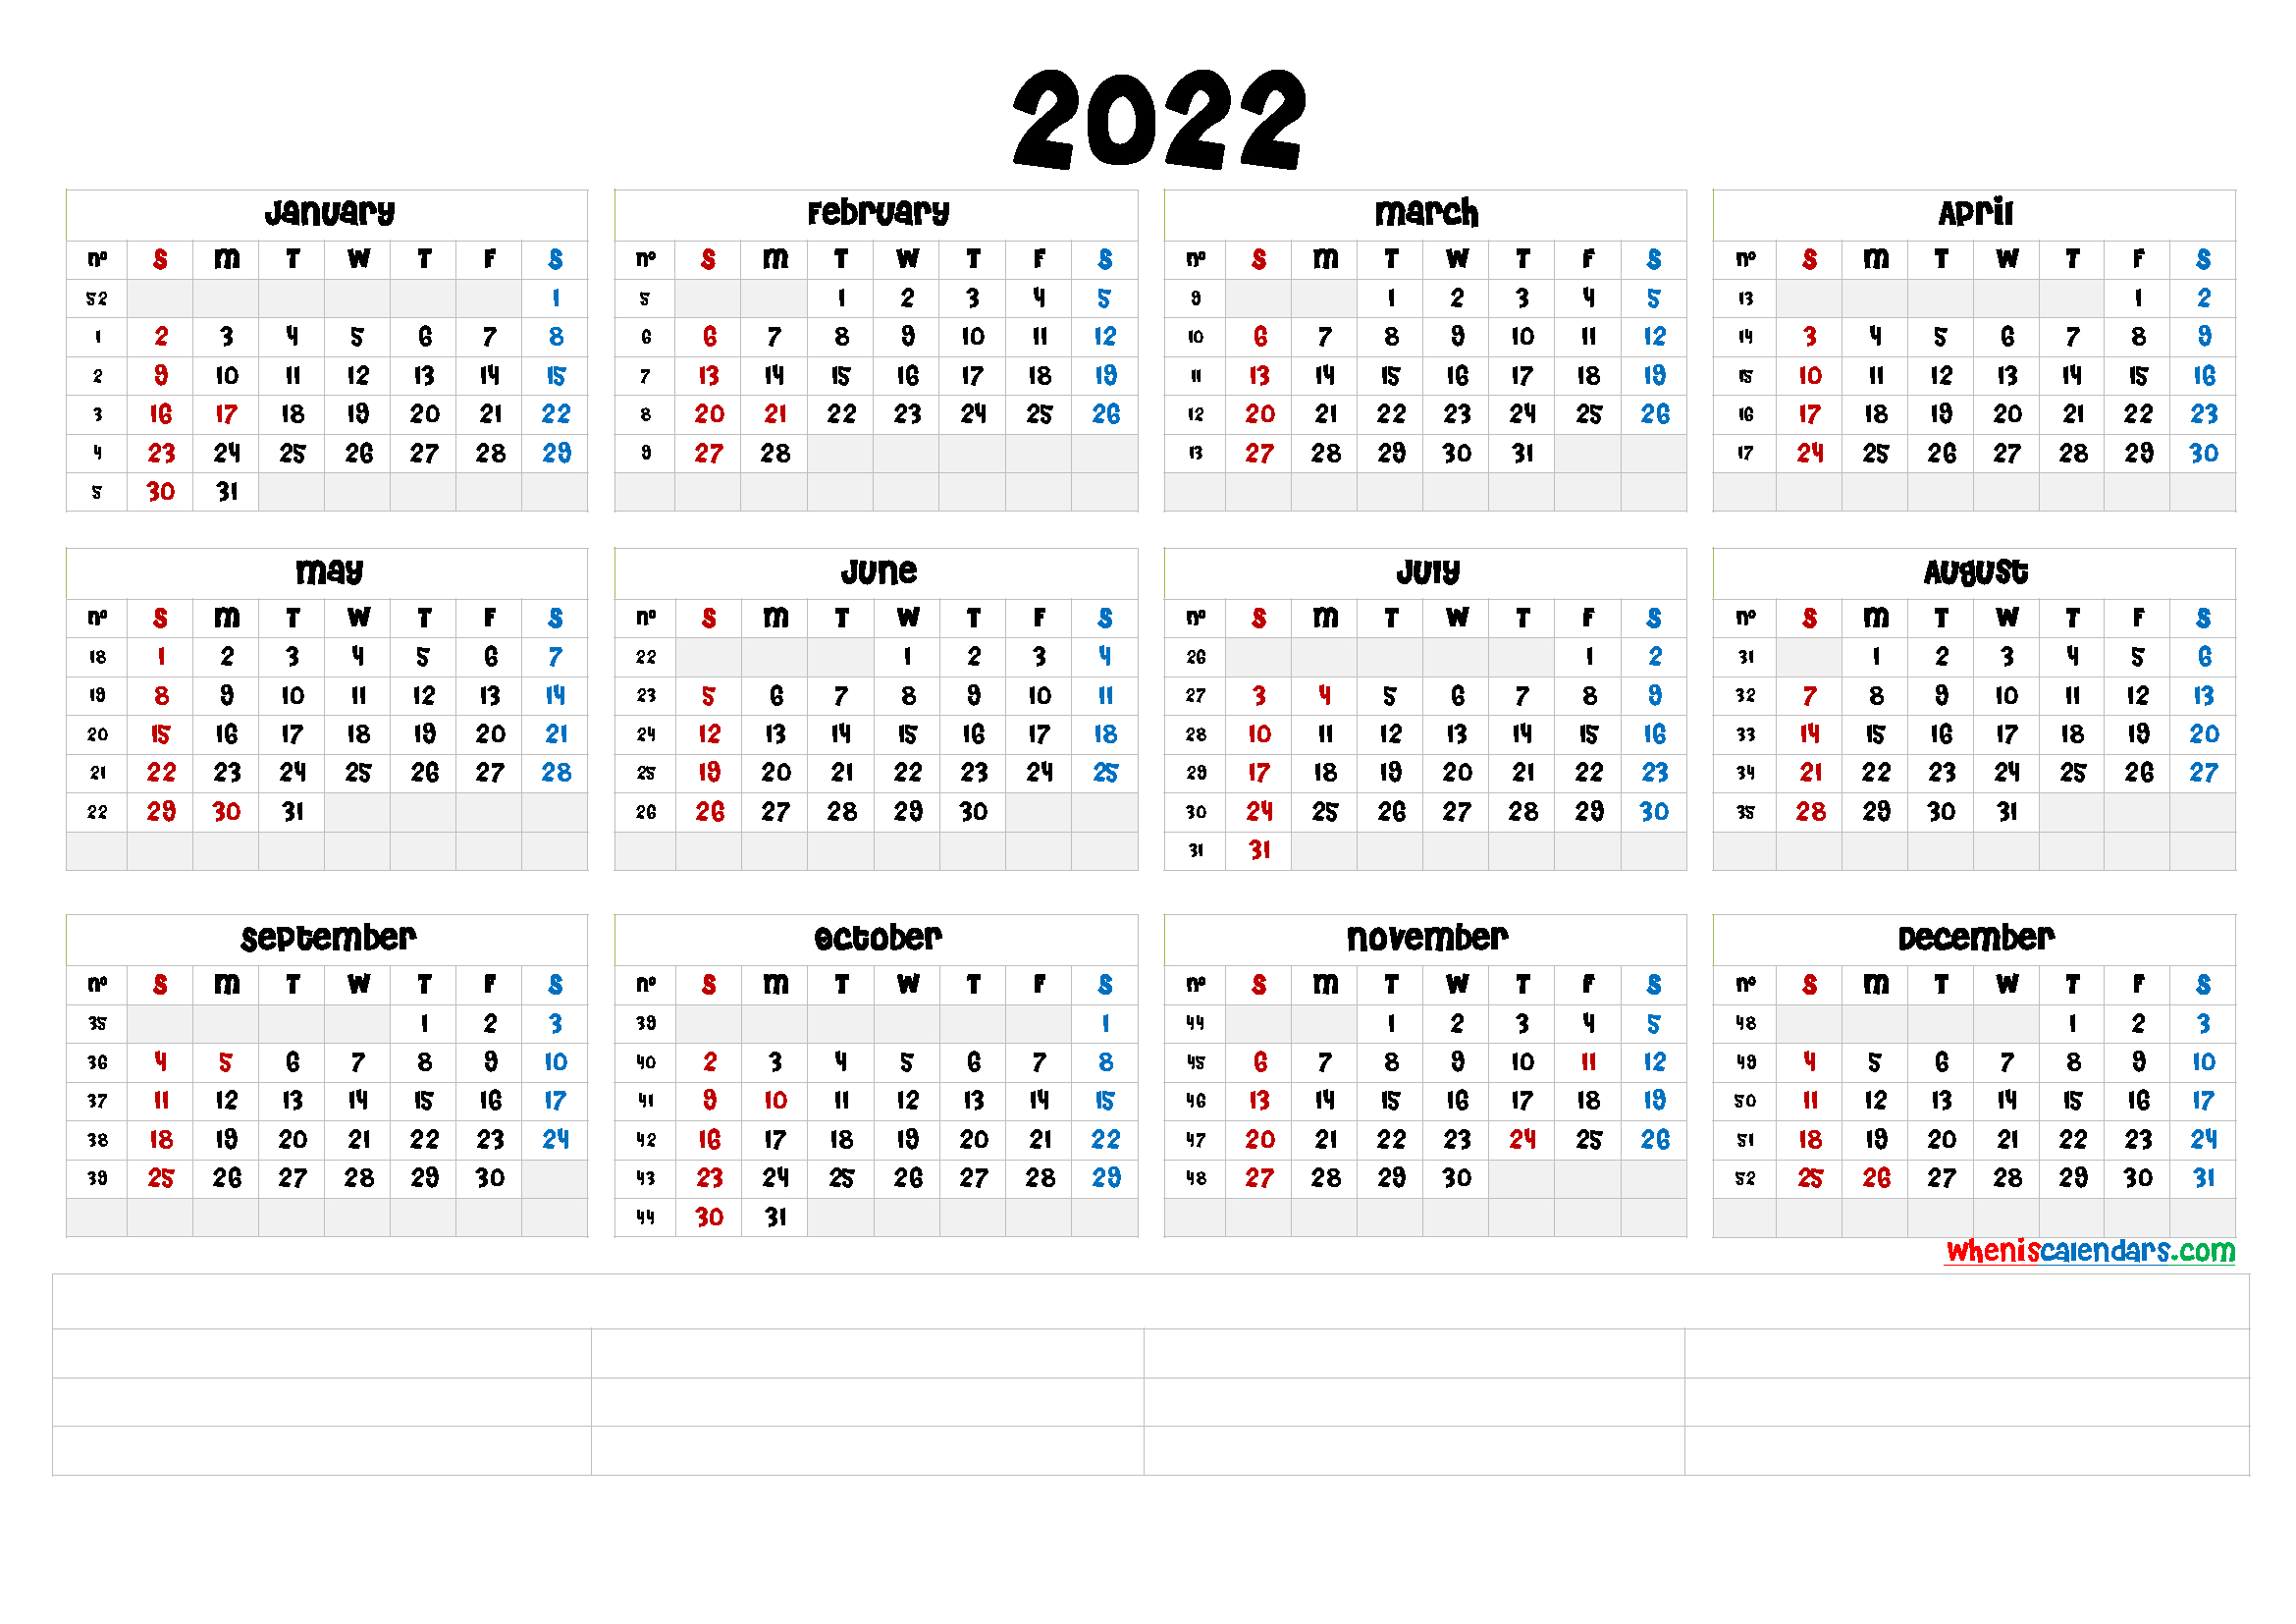 Free Printable 2022 Calendar By Month  Calendarex inside Time And Date Calendar 2022 Printable